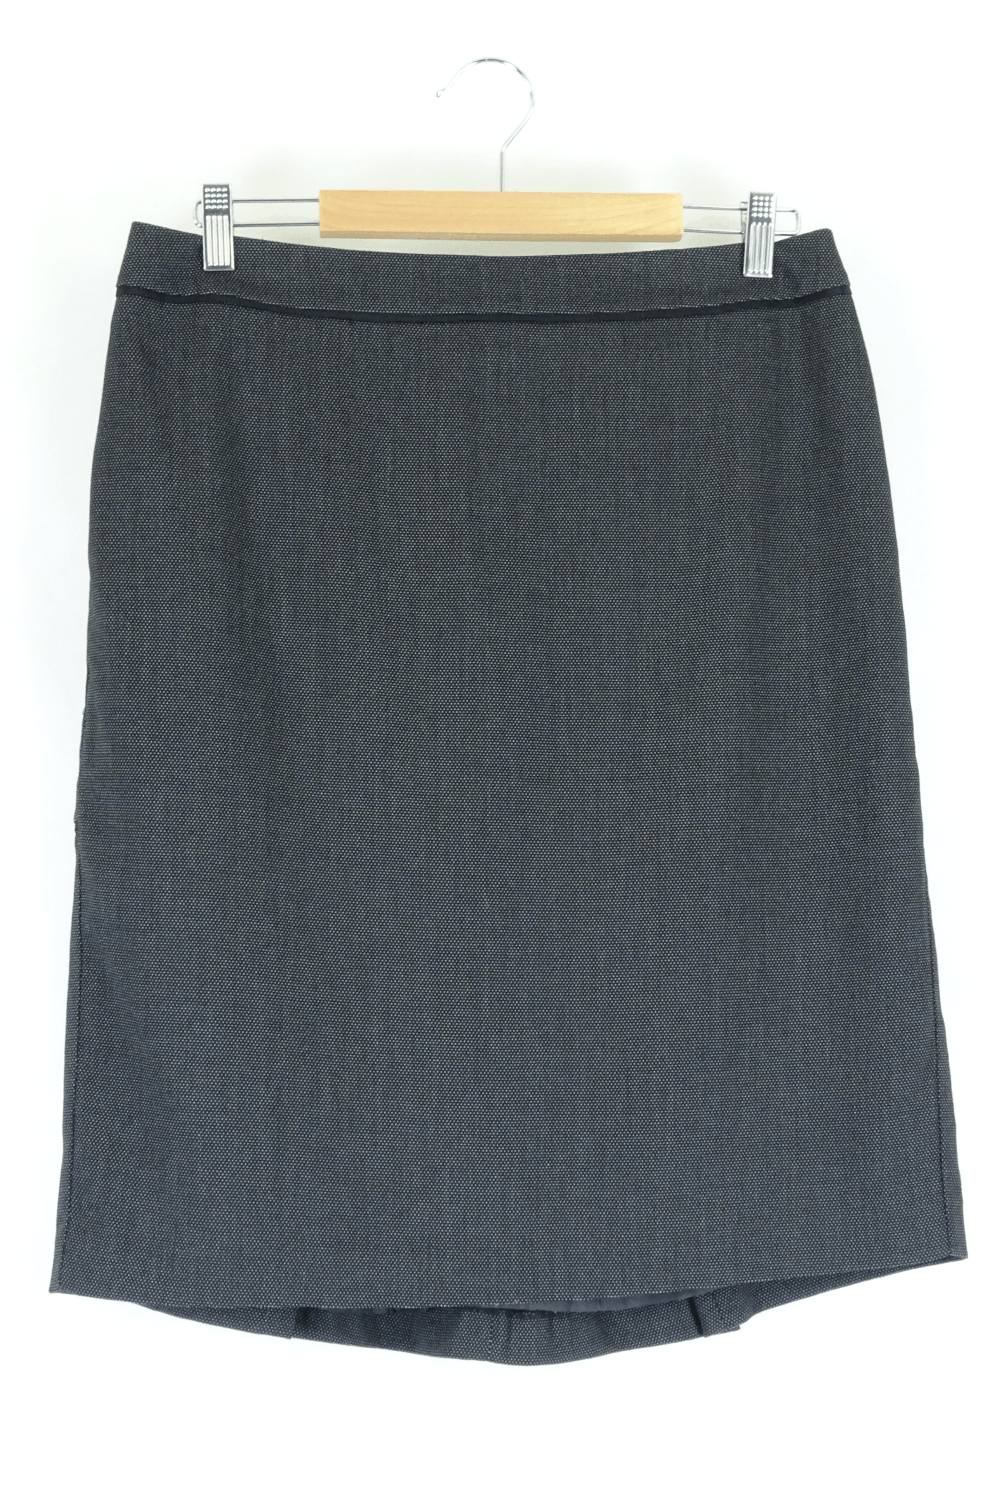 Jacquie Black Patterned Pencil Skirt 12